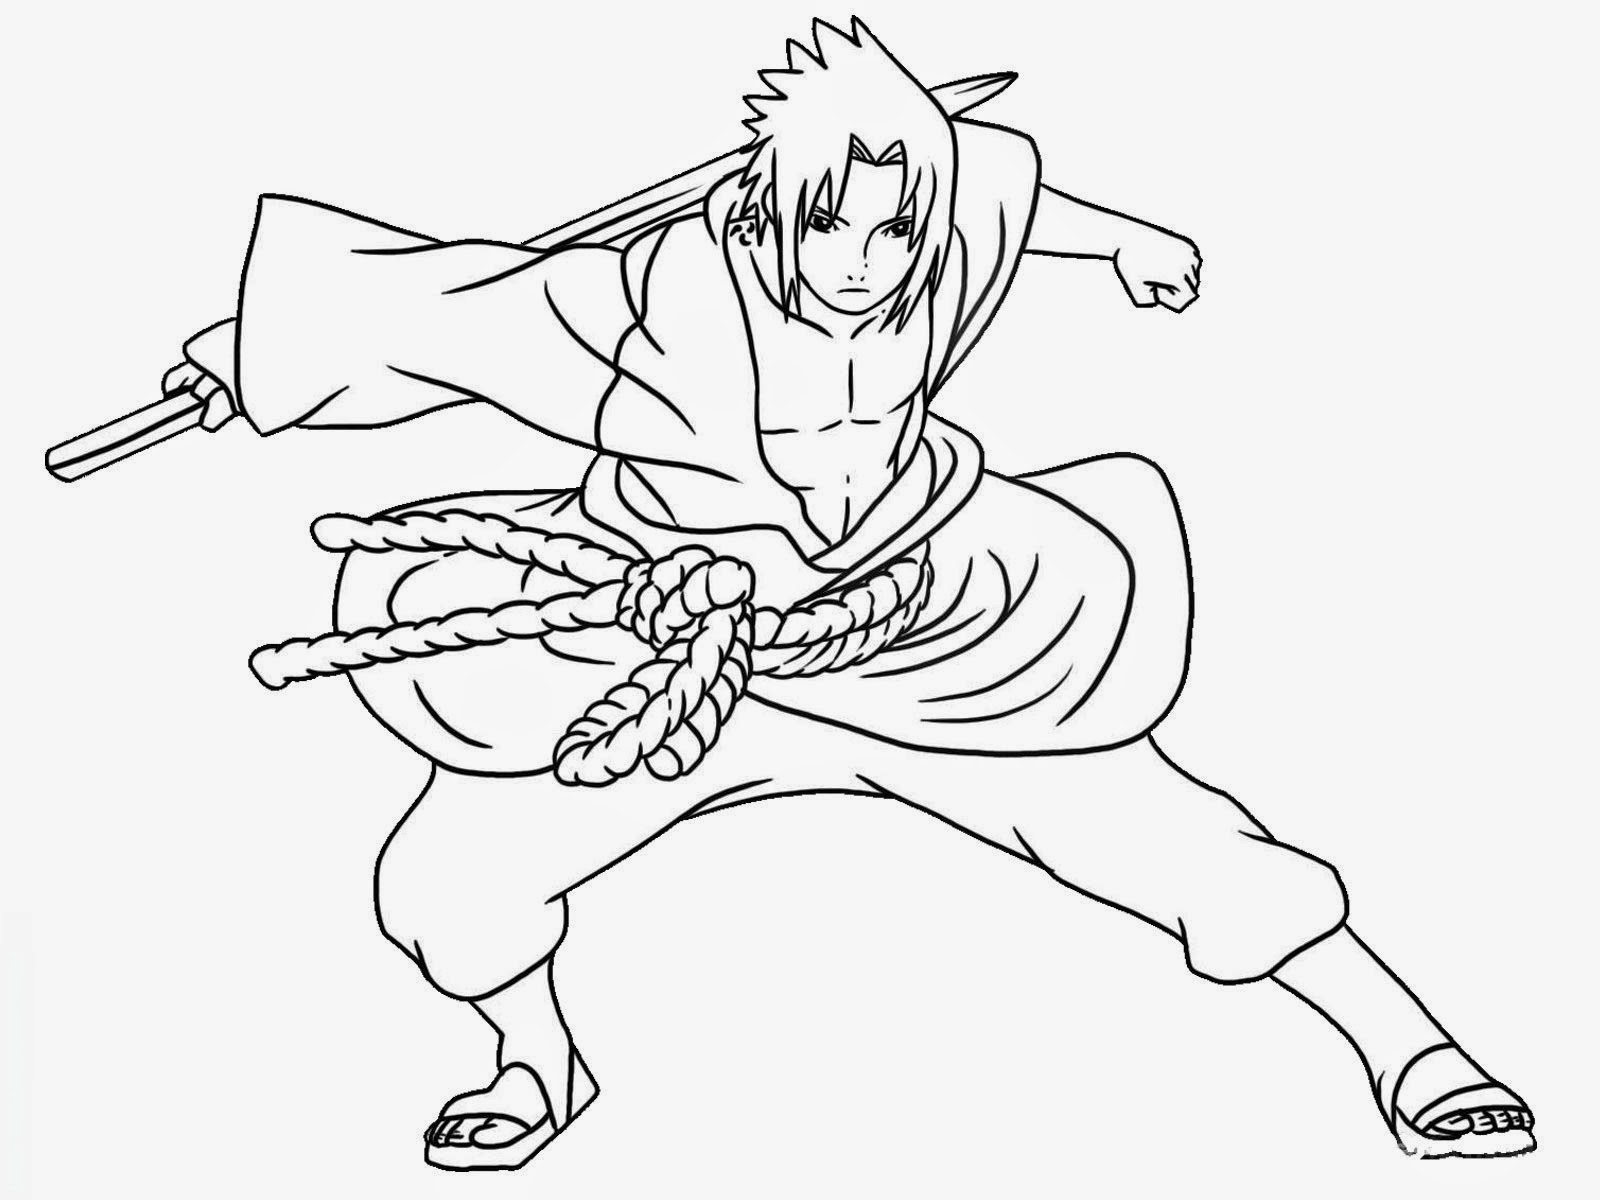 Gambar Mewarnai Naruto ~ Gambar Mewarnai Lucu